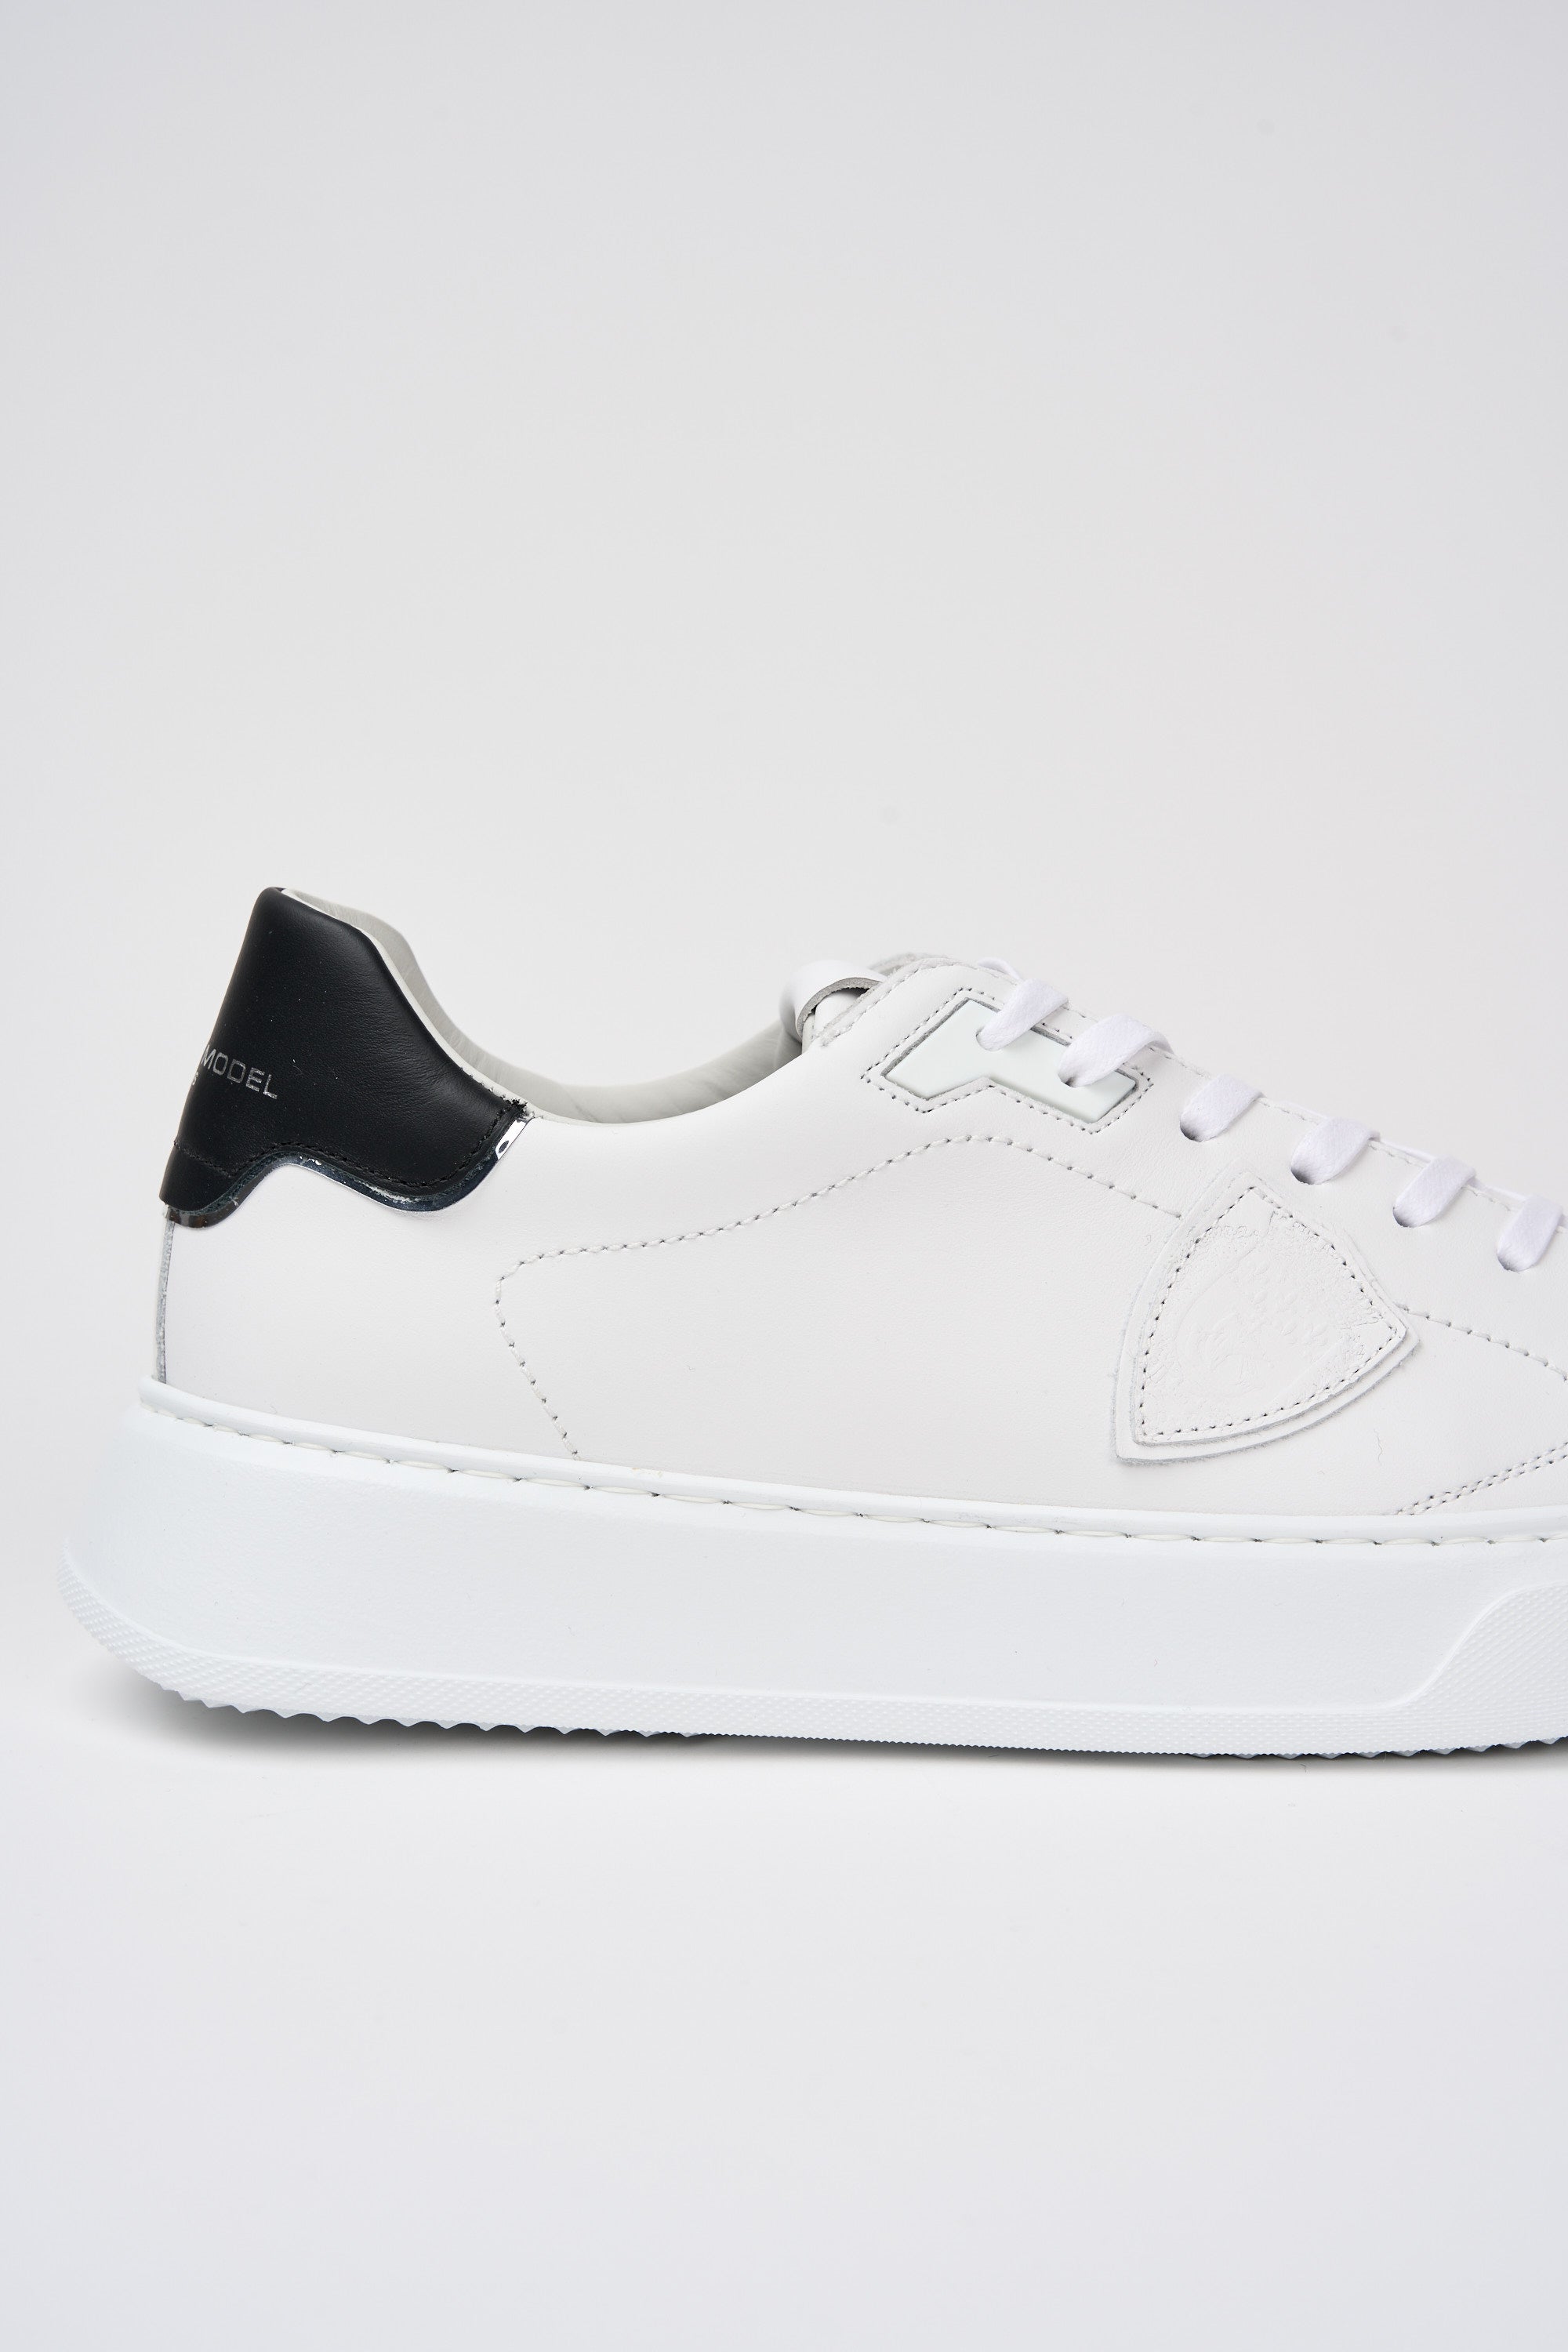 Philippe Model Sneaker Temple Leather White/Black-4